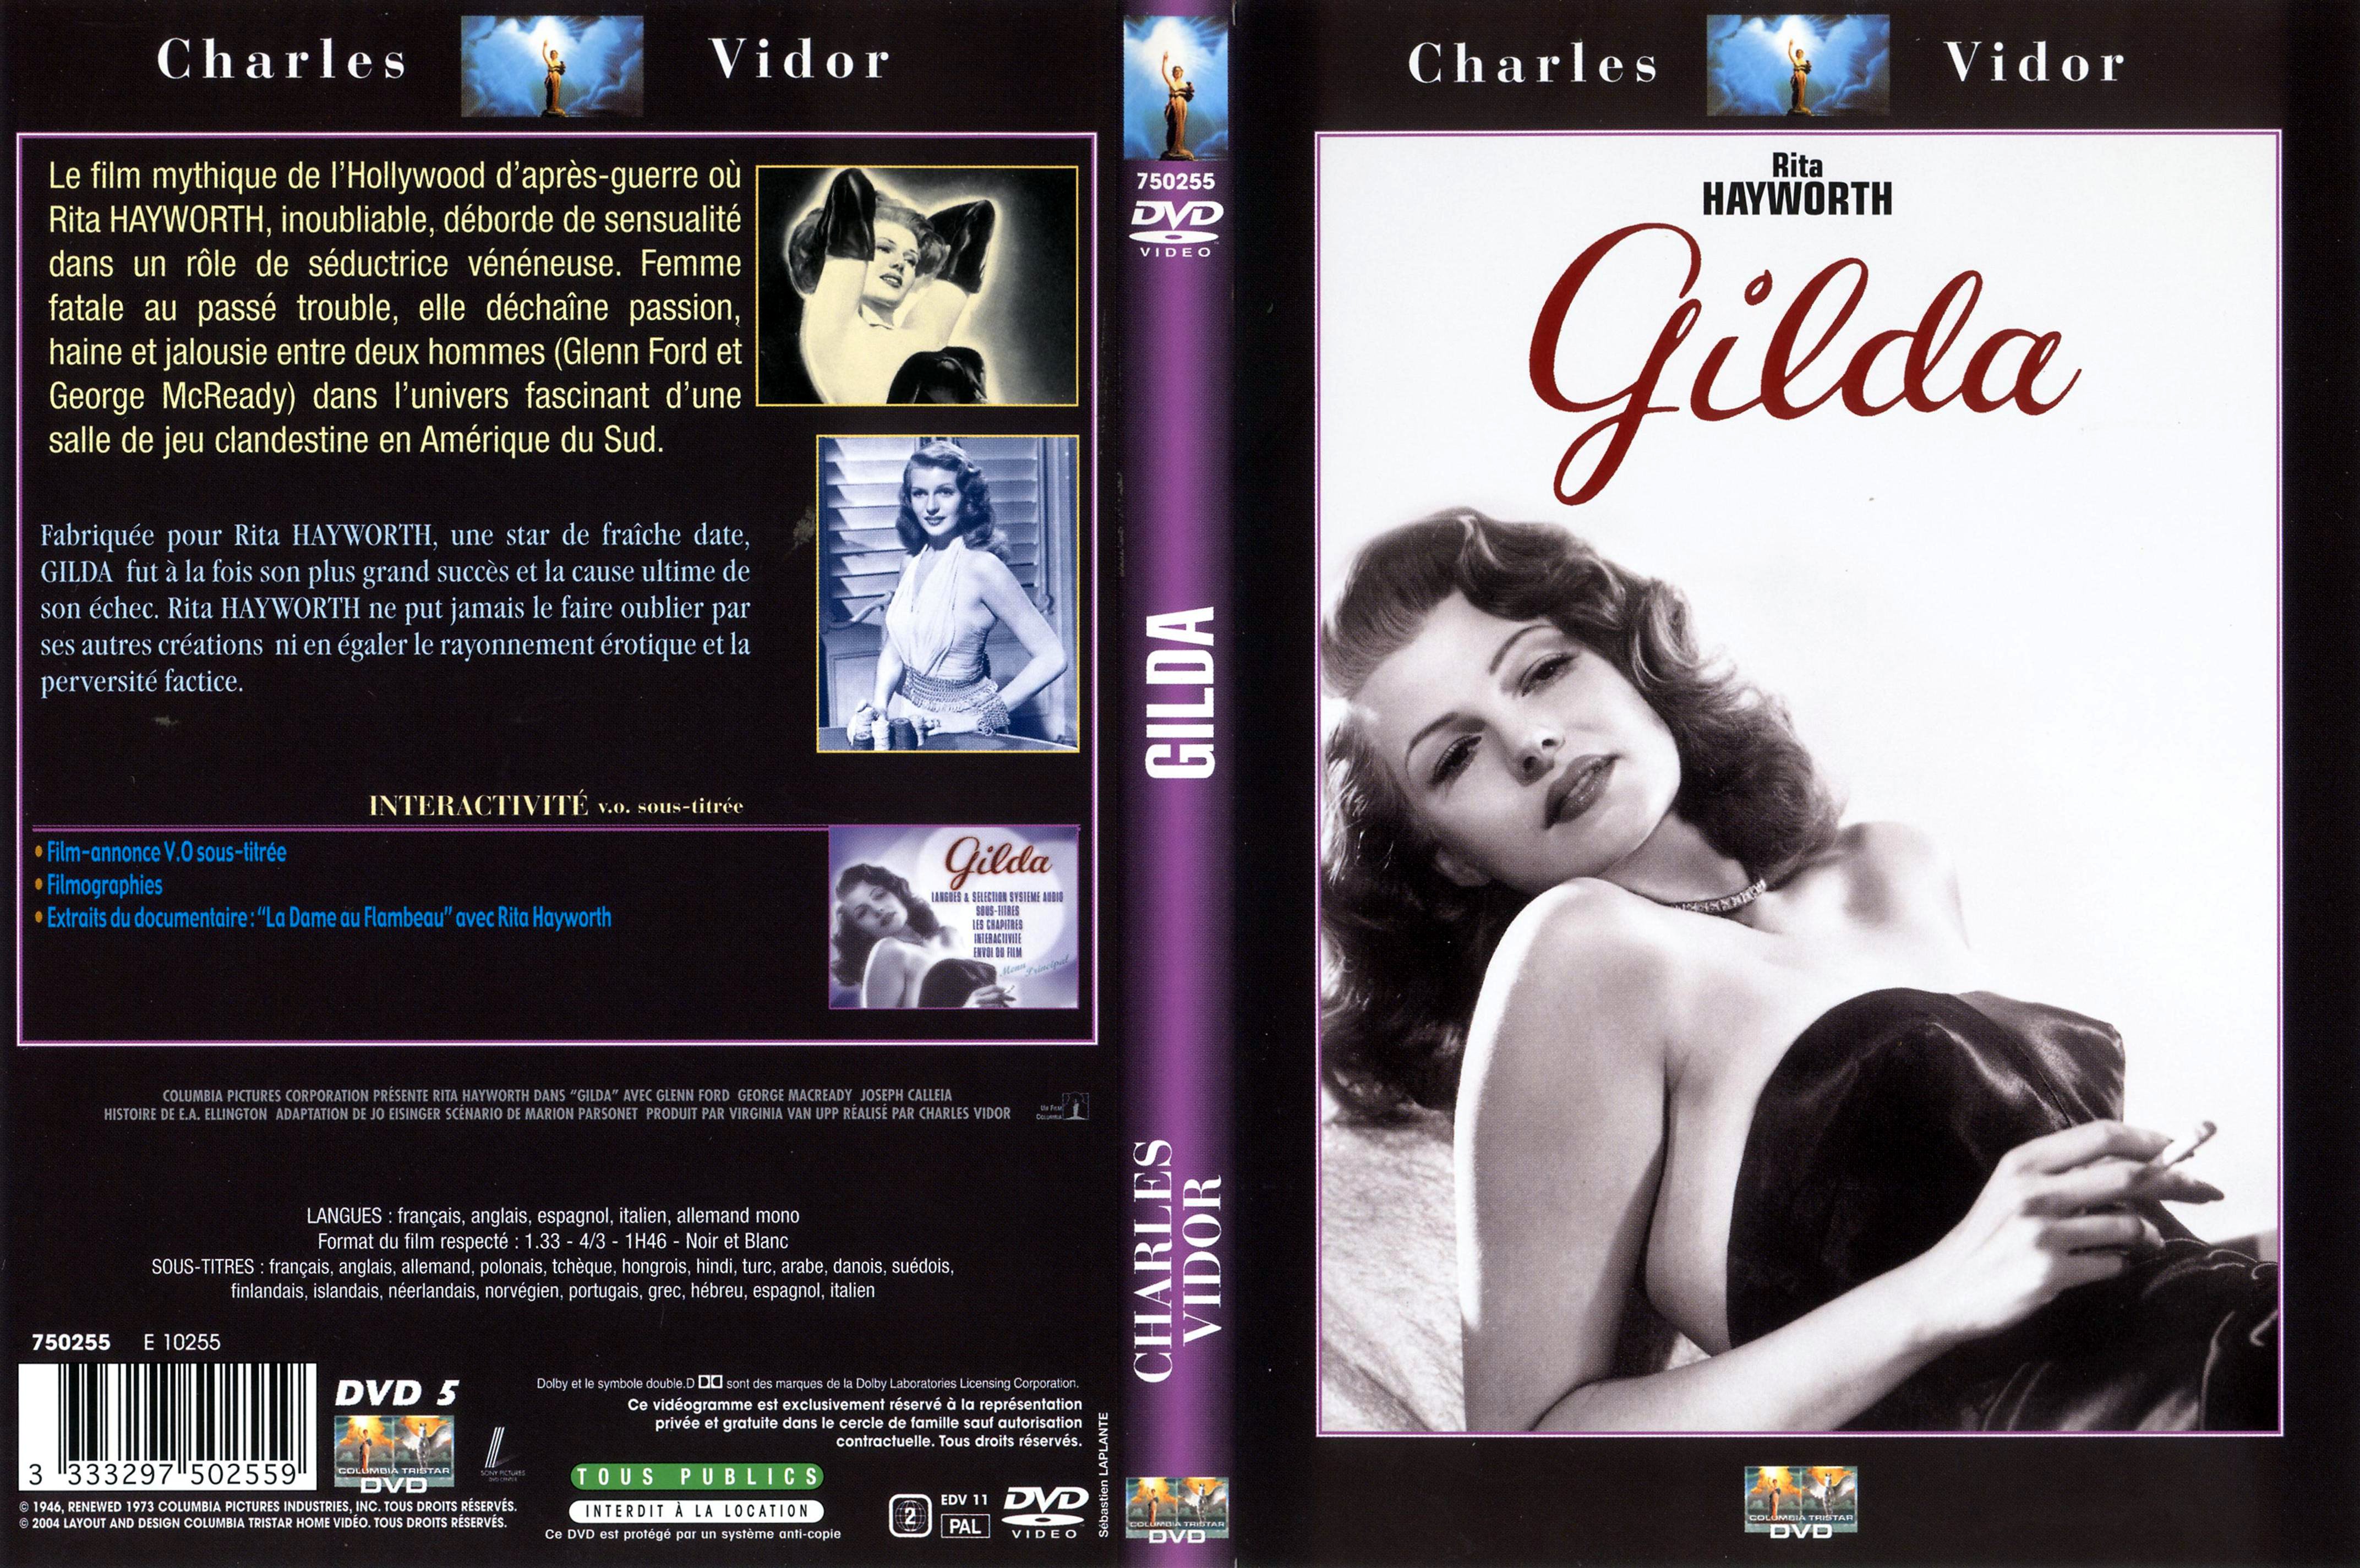 Jaquette DVD Gilda v3